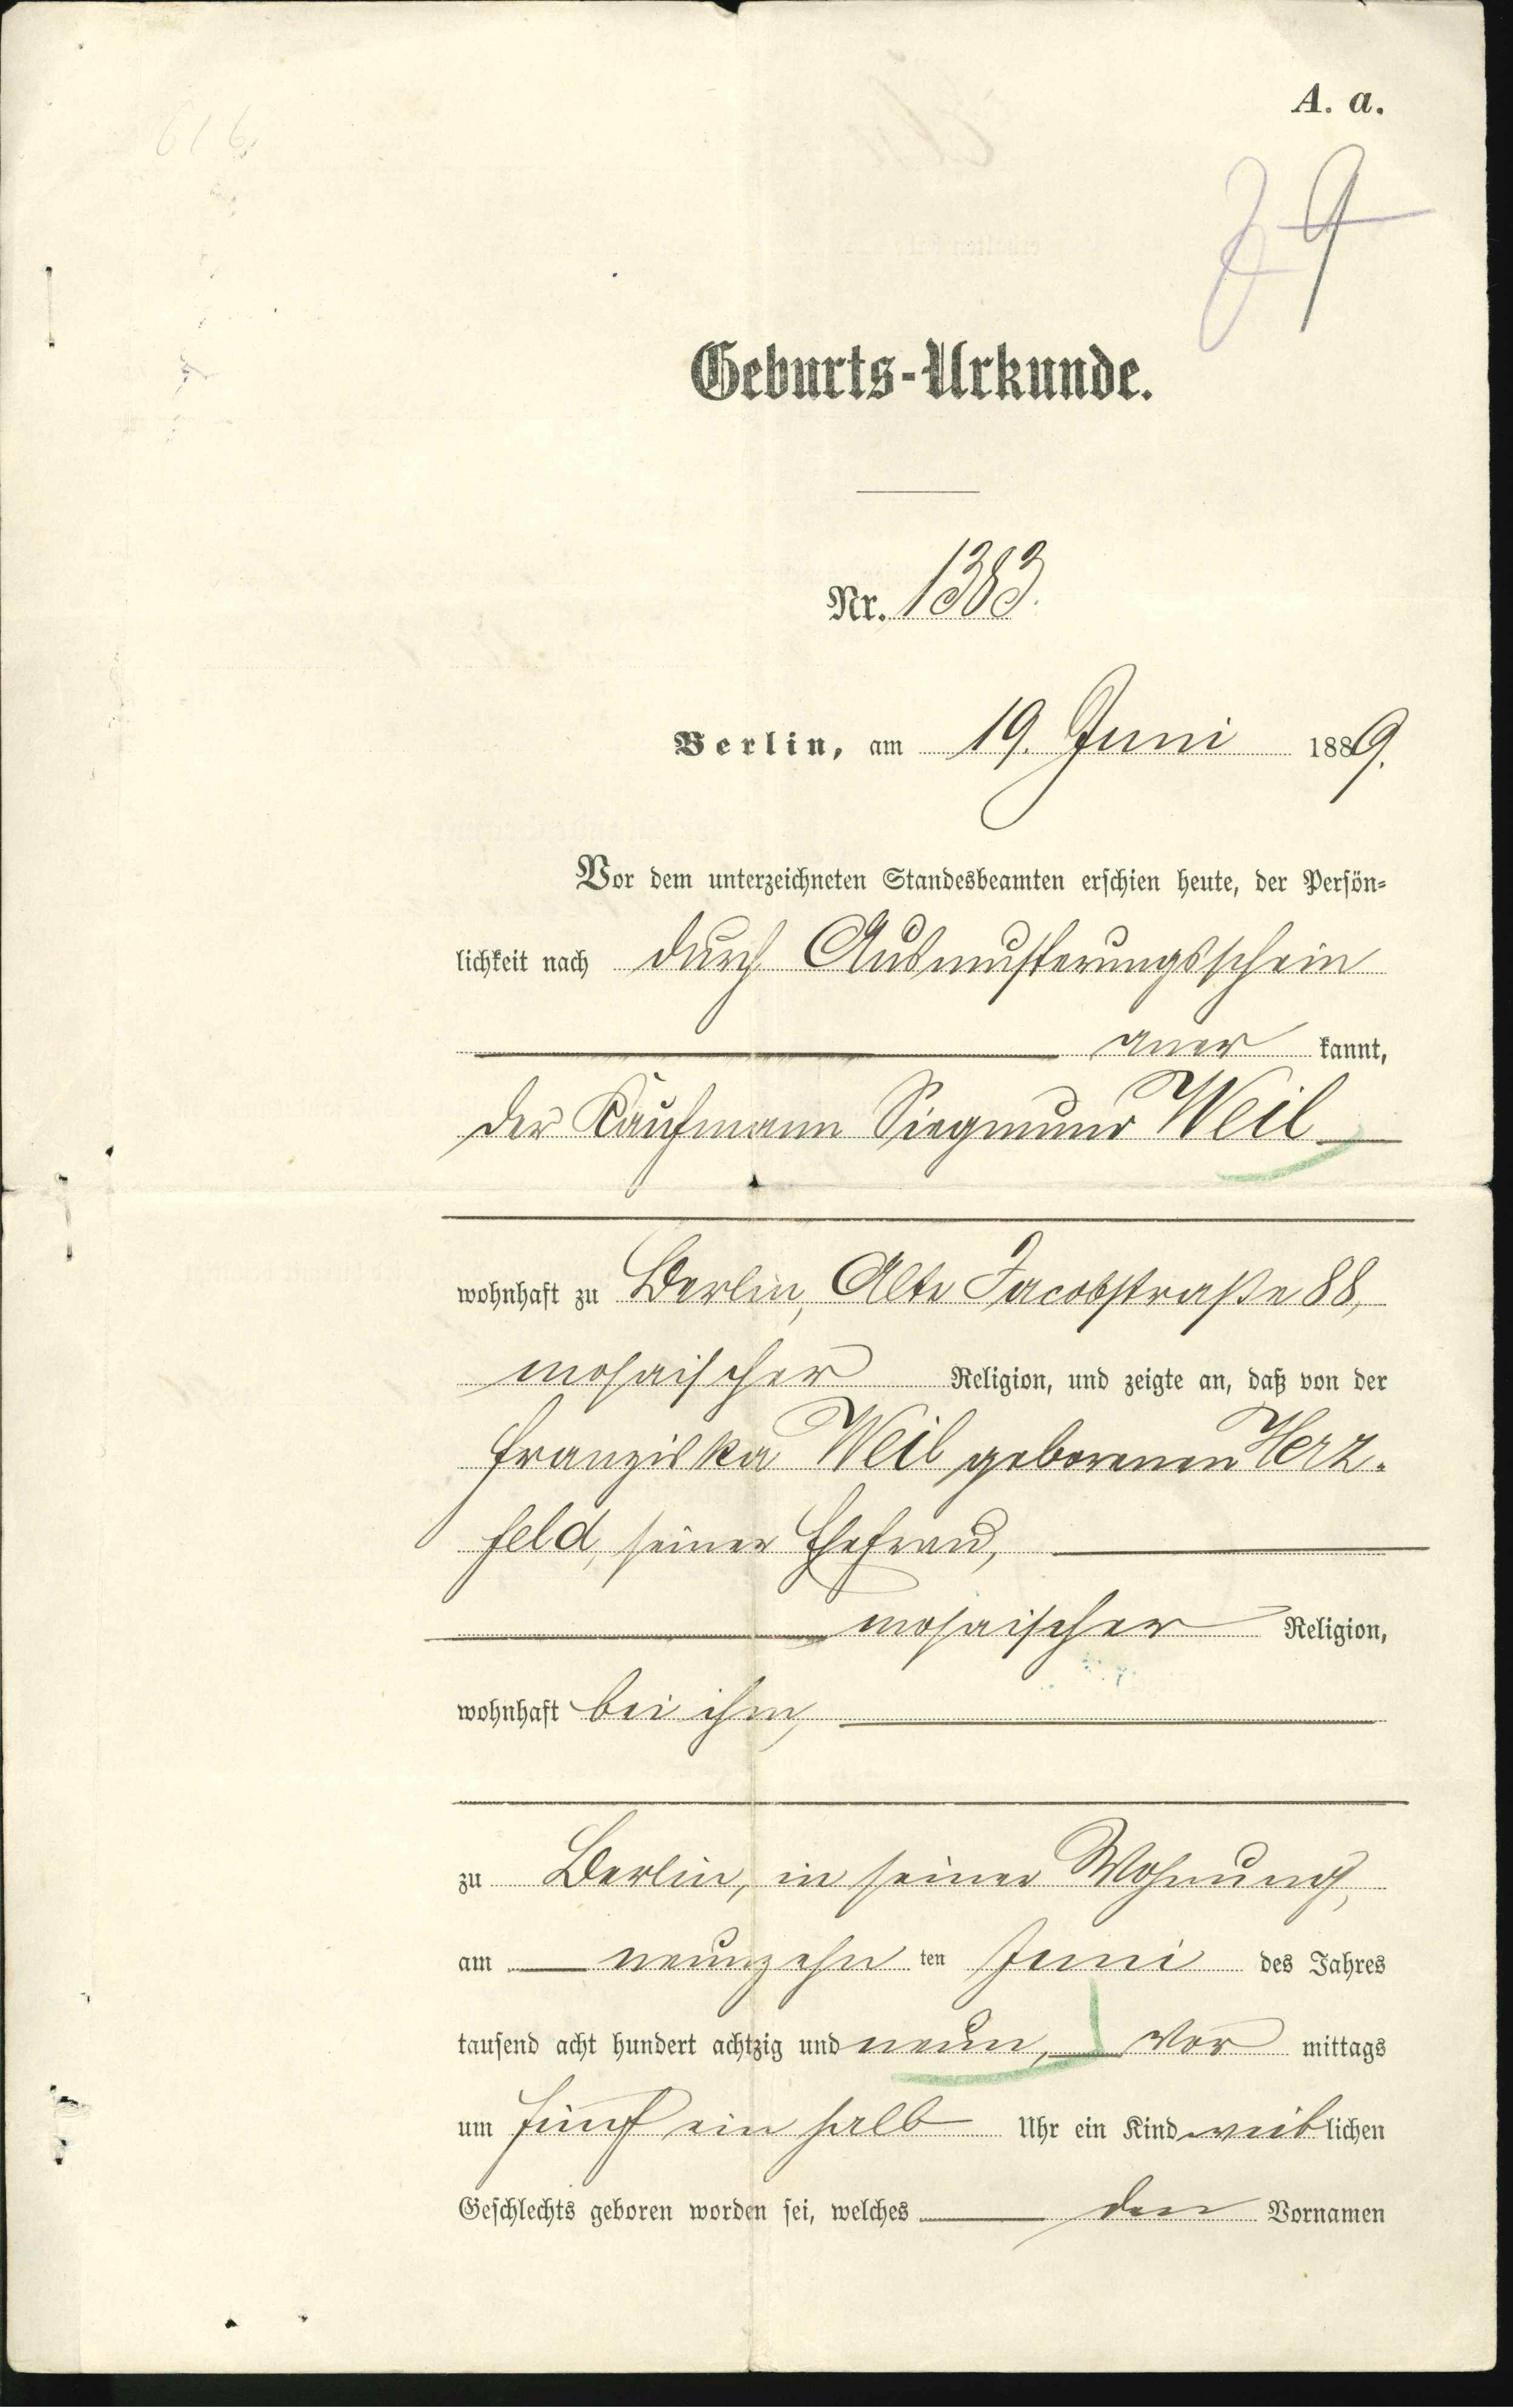 Geburtsurkunde von Else Weil, Berlin, 19.06.1889 (KTL CC BY-NC-SA)